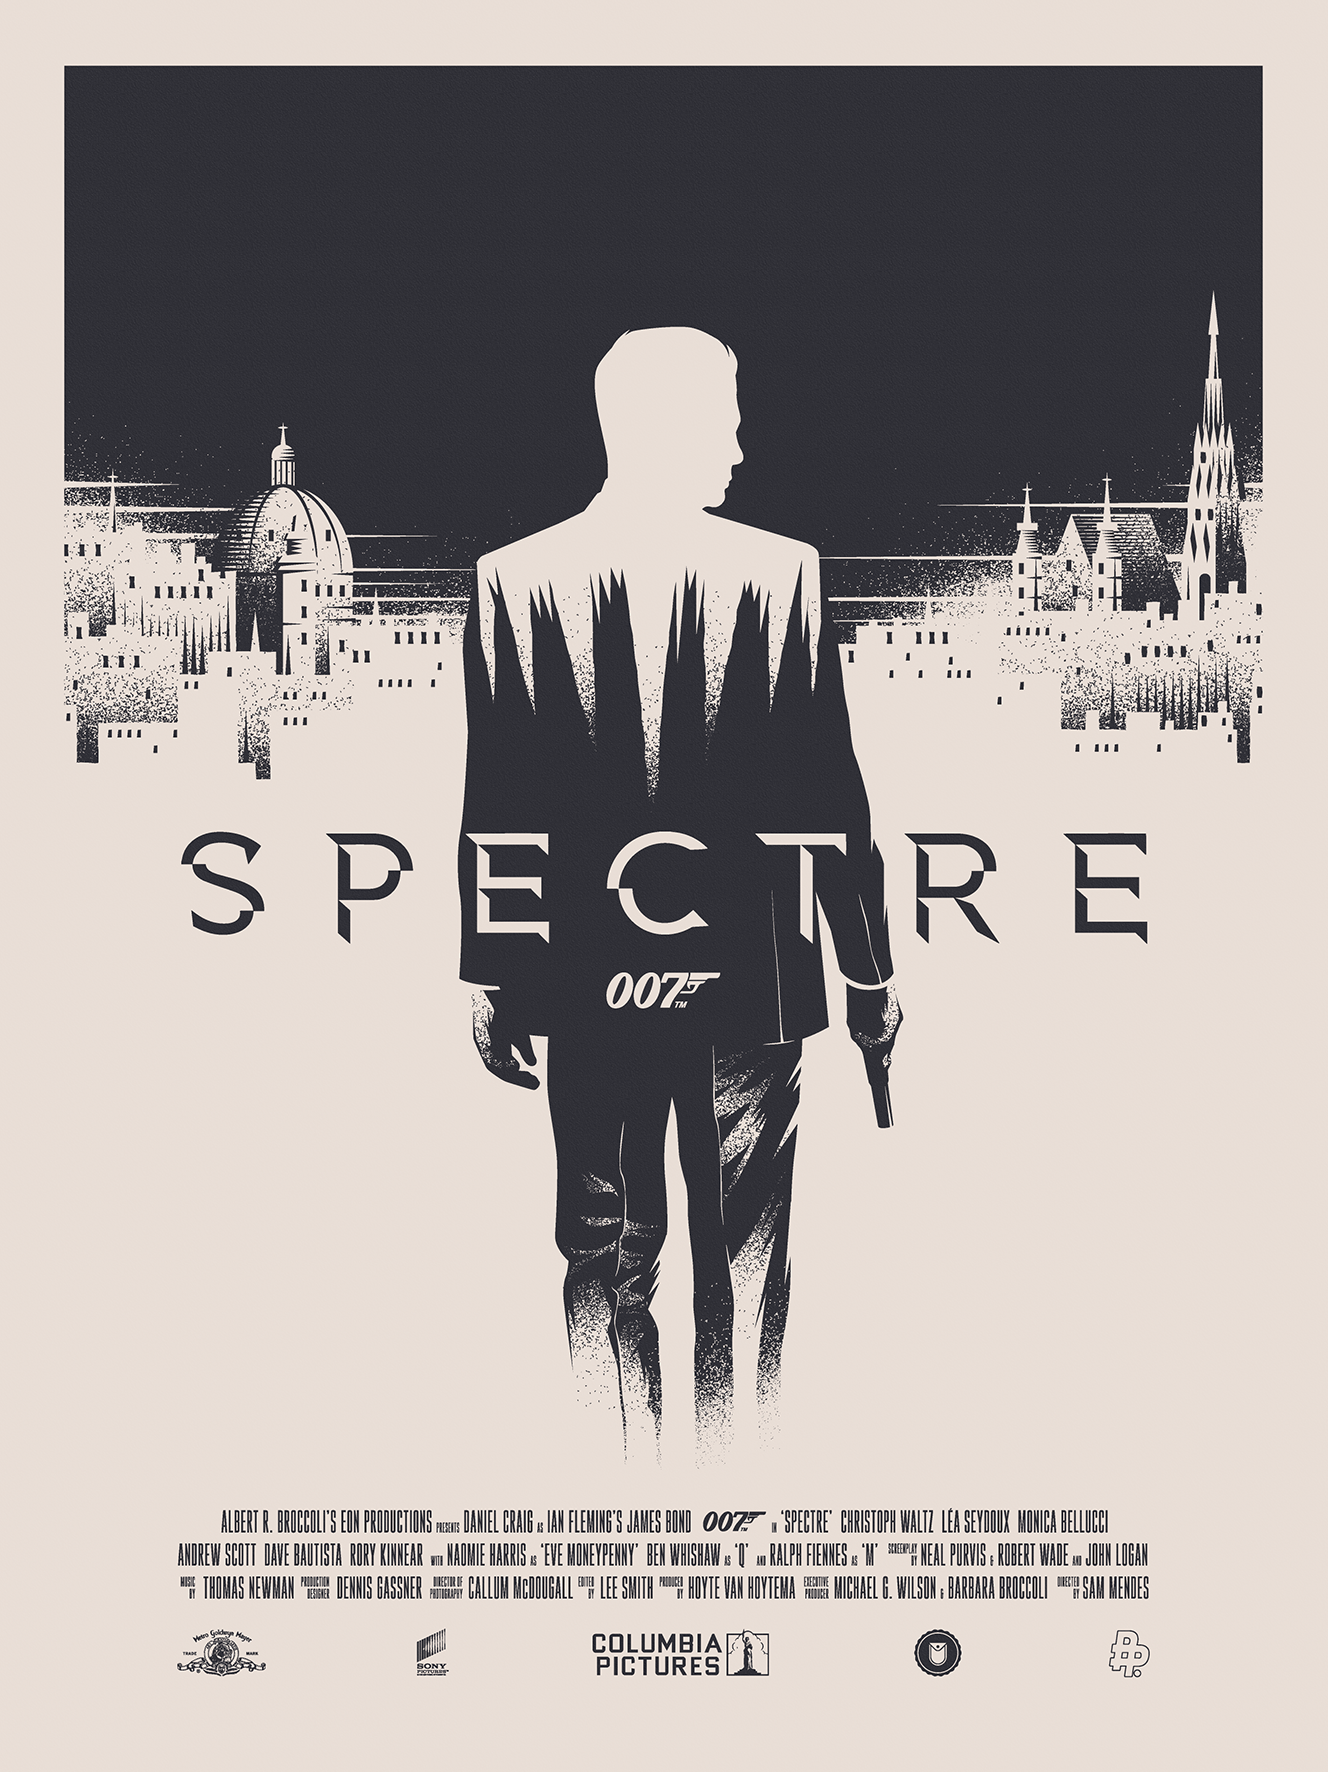 SPECTRE - 007 James Bond Daniel Craig Artwork FanArt Poster Posse Image 5 Thomas Walker - Go with the Blog